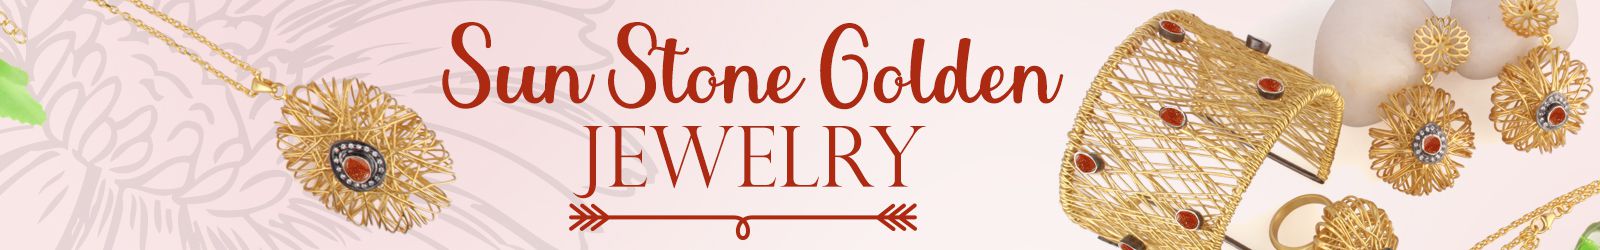 Silver Sunstone Golden Jewelry Wholesale Supplier